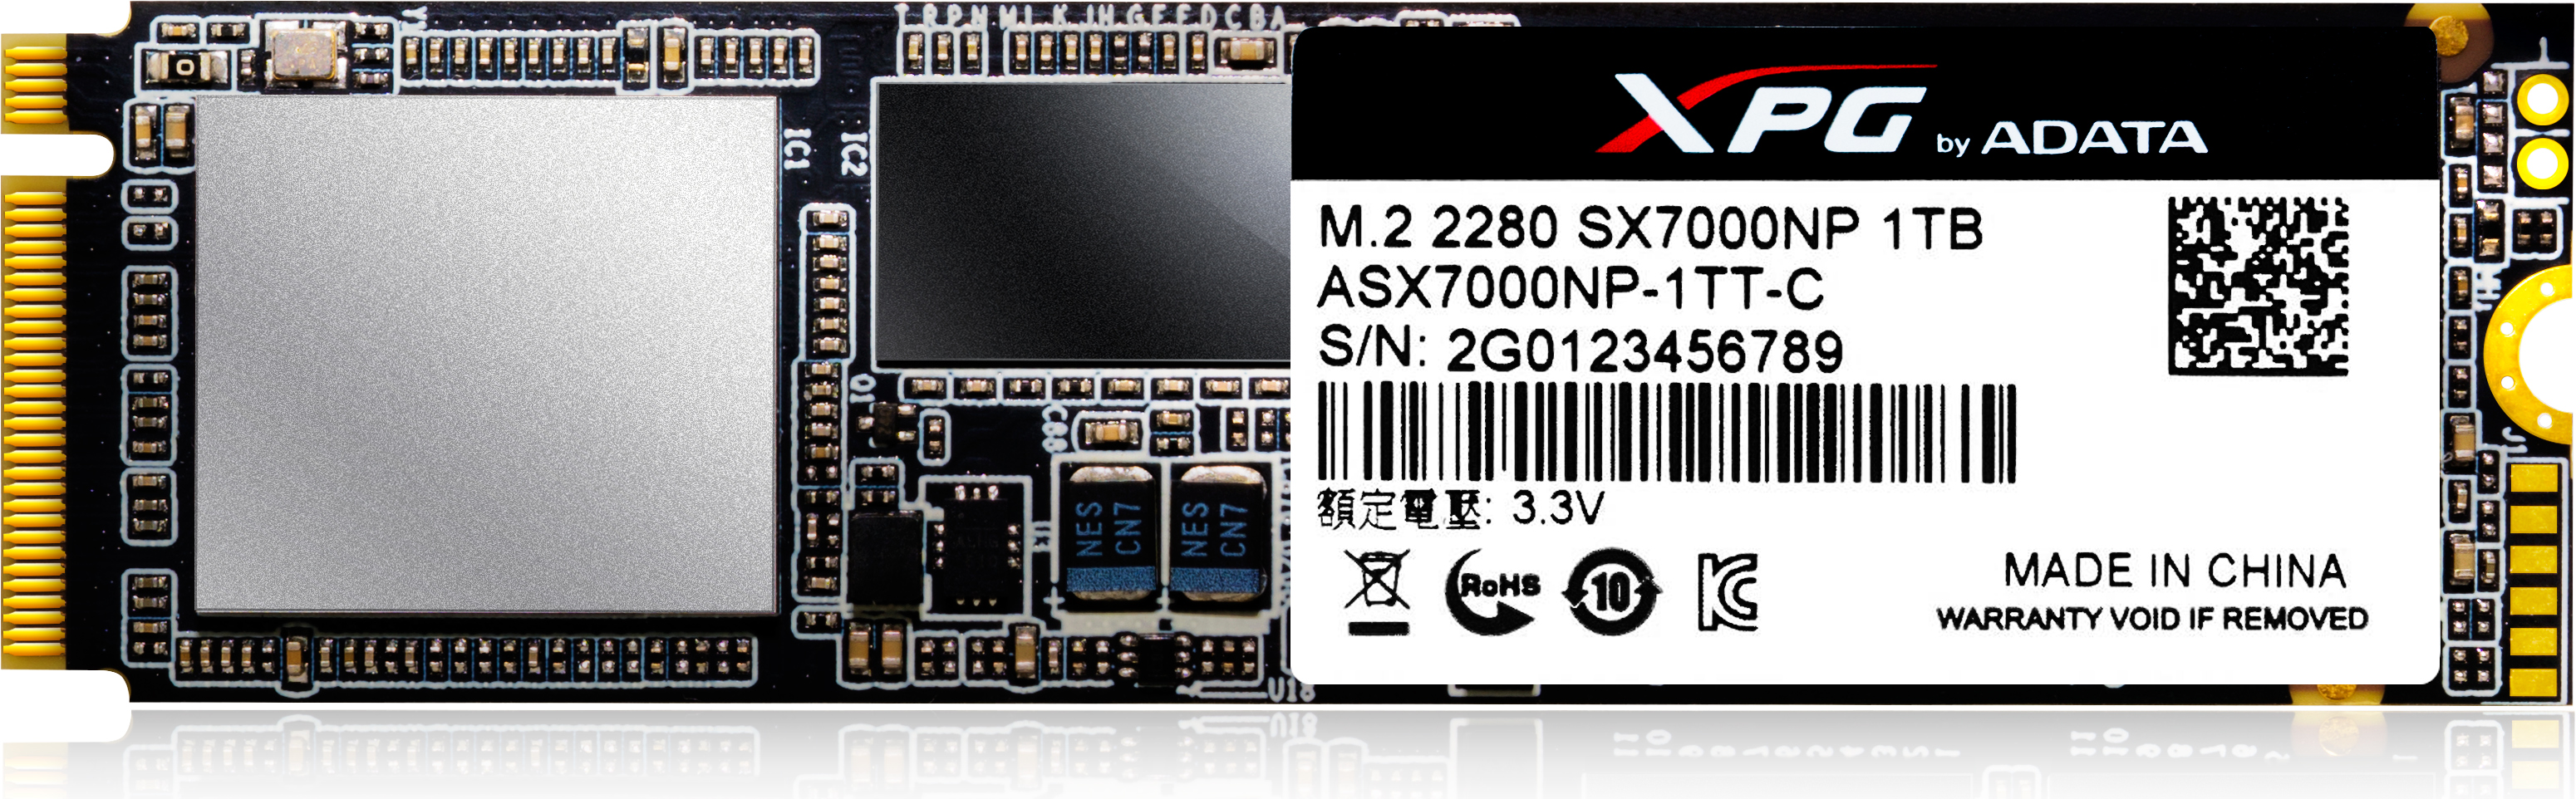 ADATA Announces The XPG SX7000 Series SSDs: Up to 1 TB, M.2, PCIe 